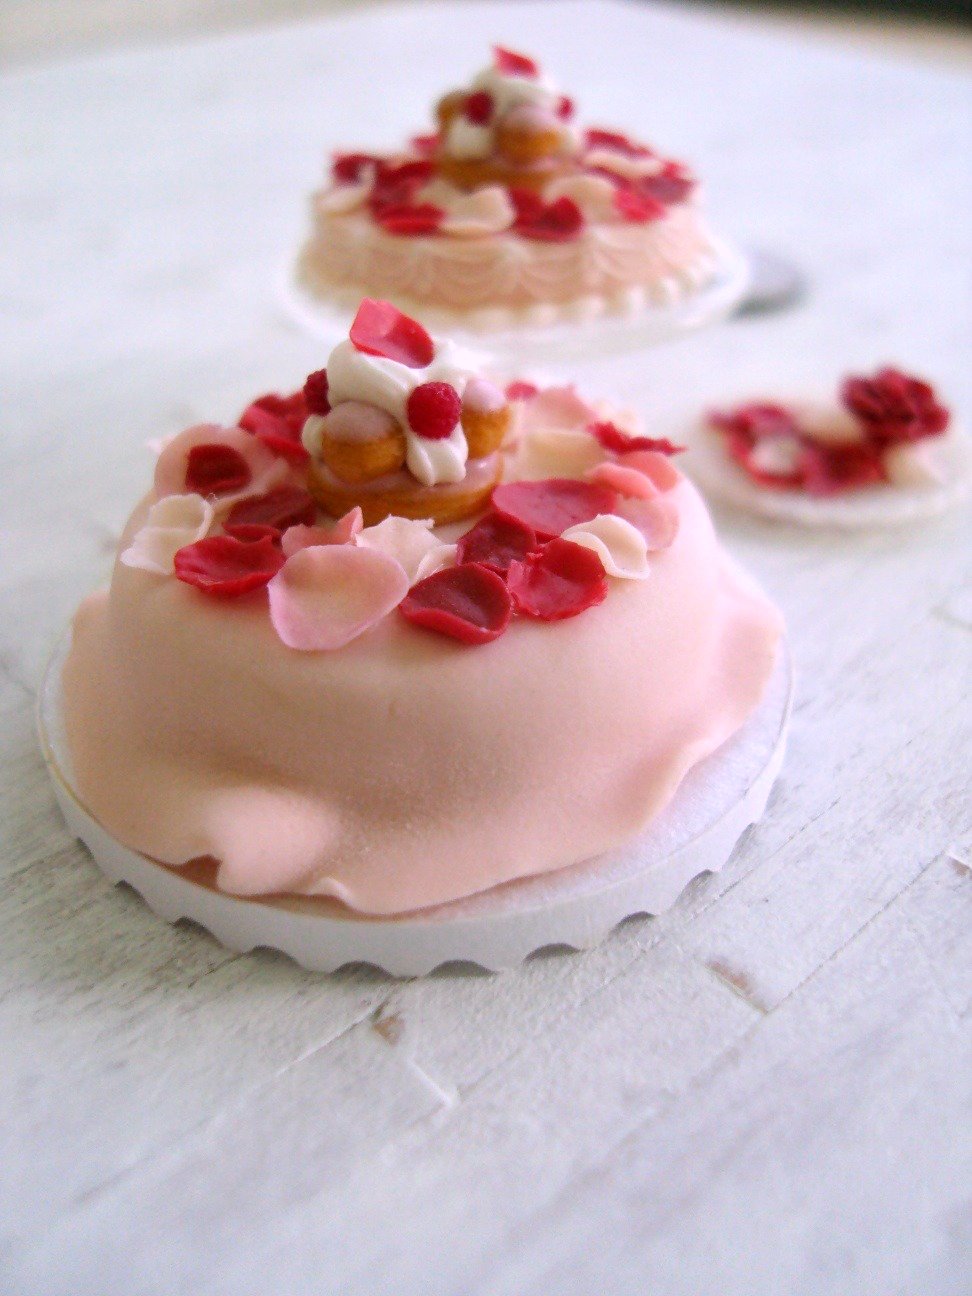 Miniature Rose Petal Cake St Honore - Marie Antoinette Range - 1/12 Scale Dollhouse Miniature